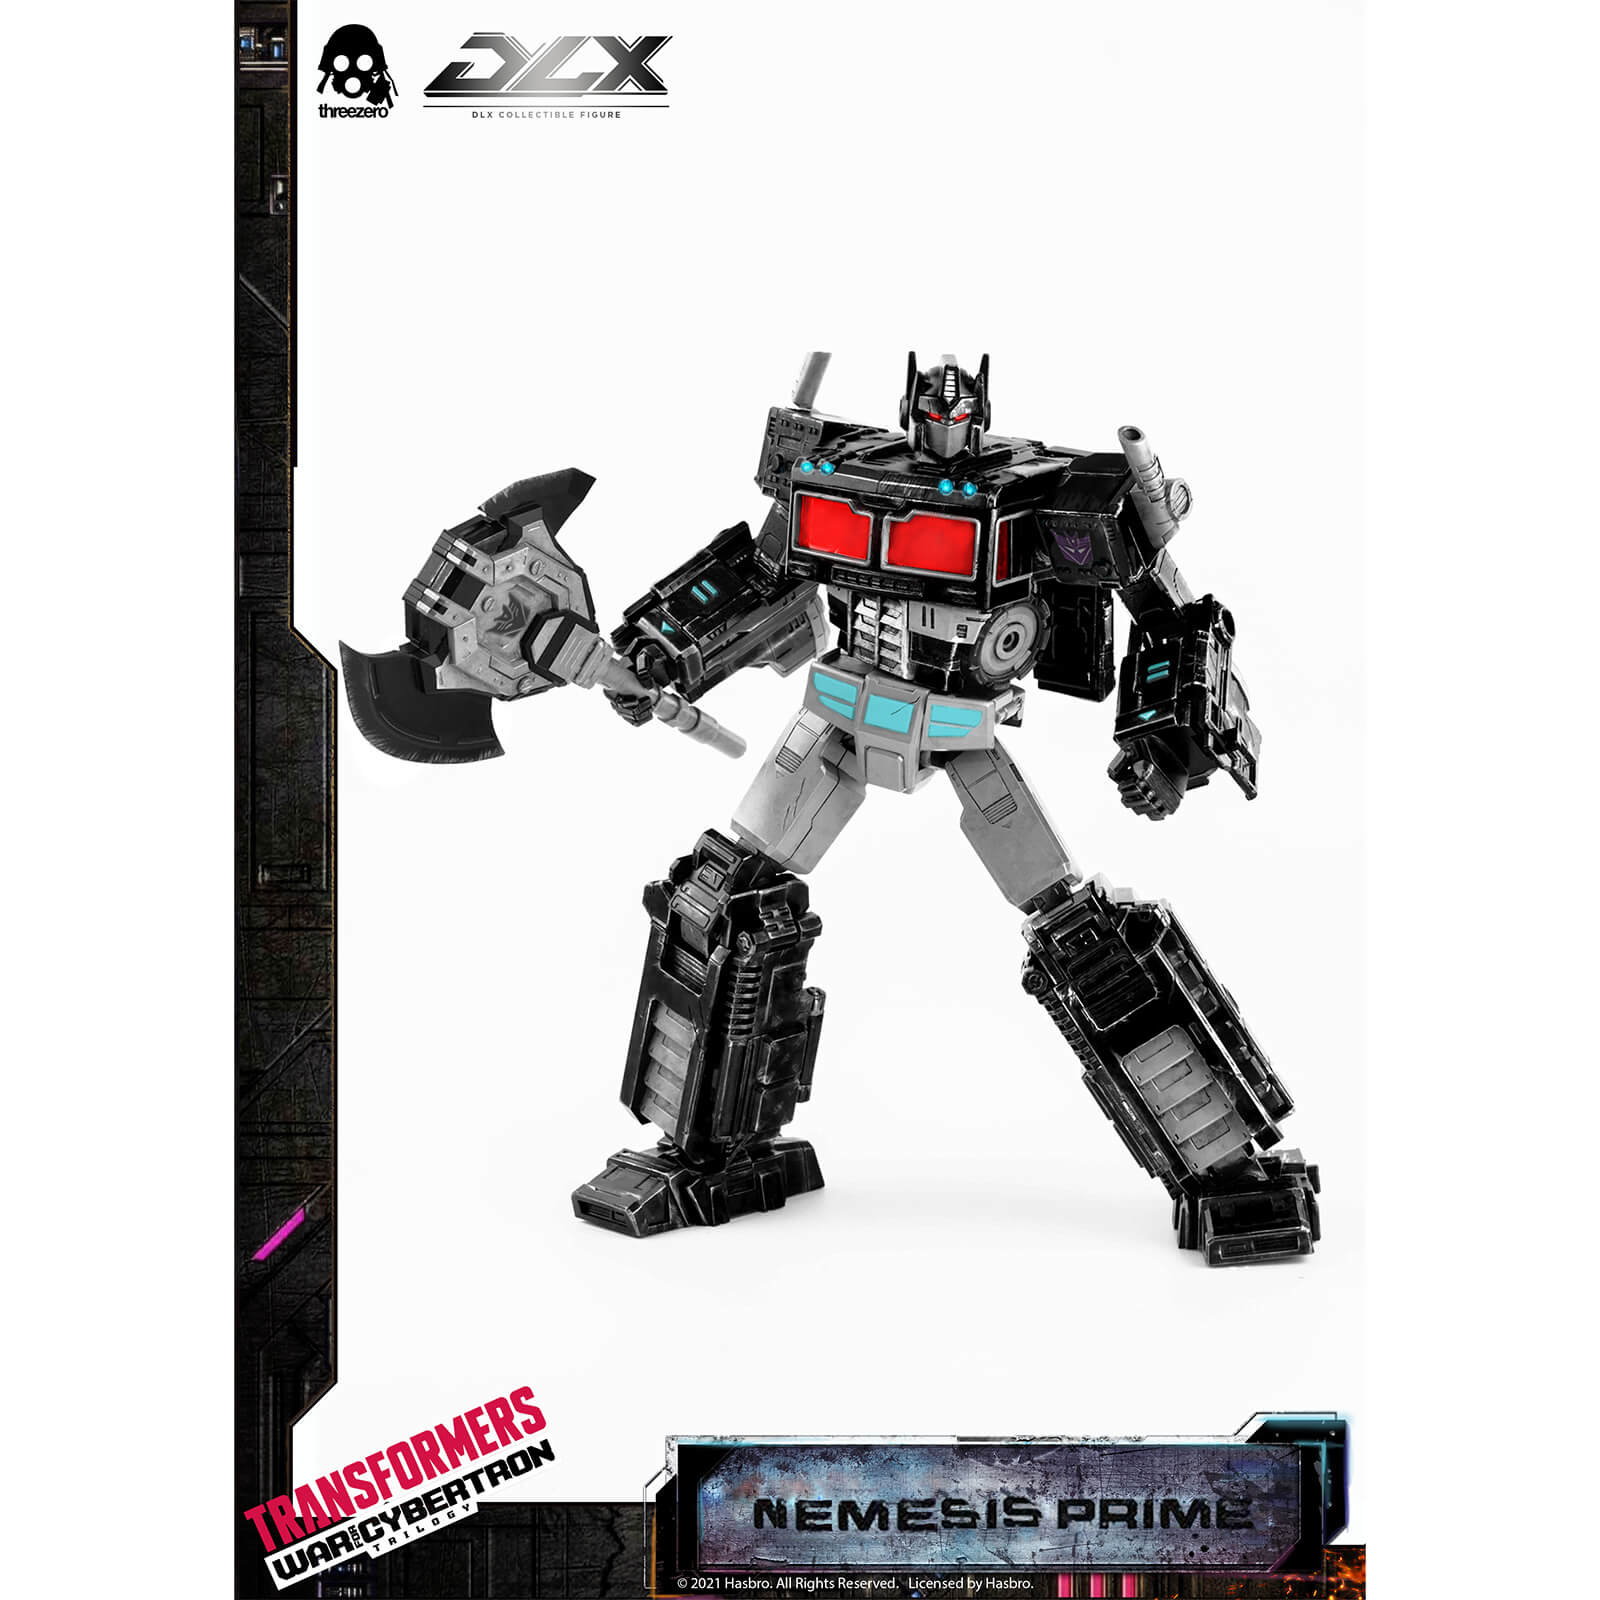 ThreeZero Transformers: War For Cybertron Nemesis Prime DLX Figure